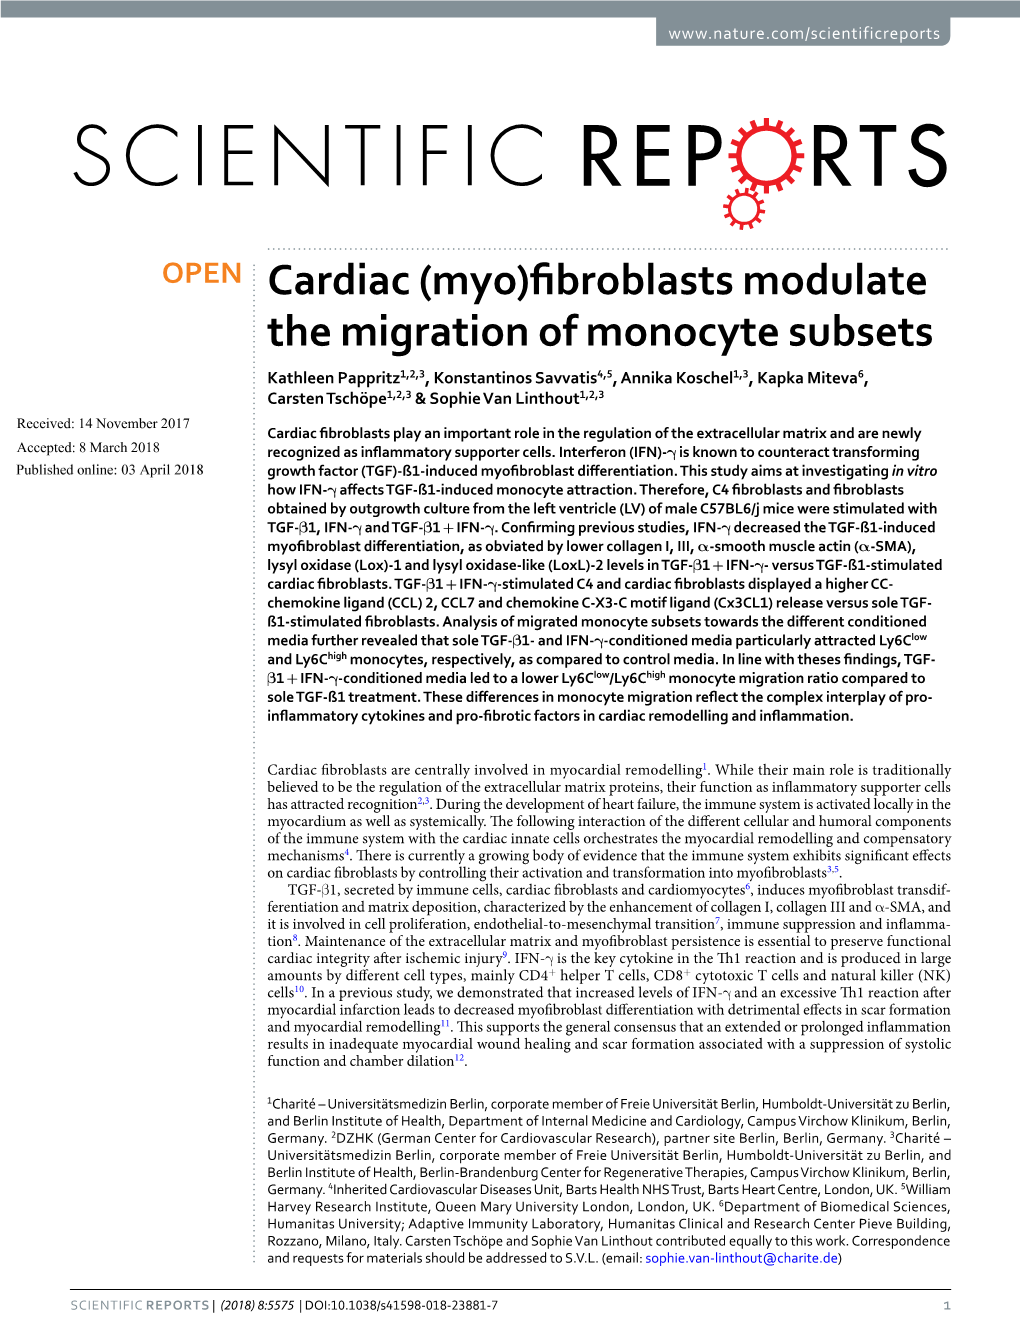 Cardiac (Myo)Fibroblasts Modulate the Migration of Monocyte Subsets